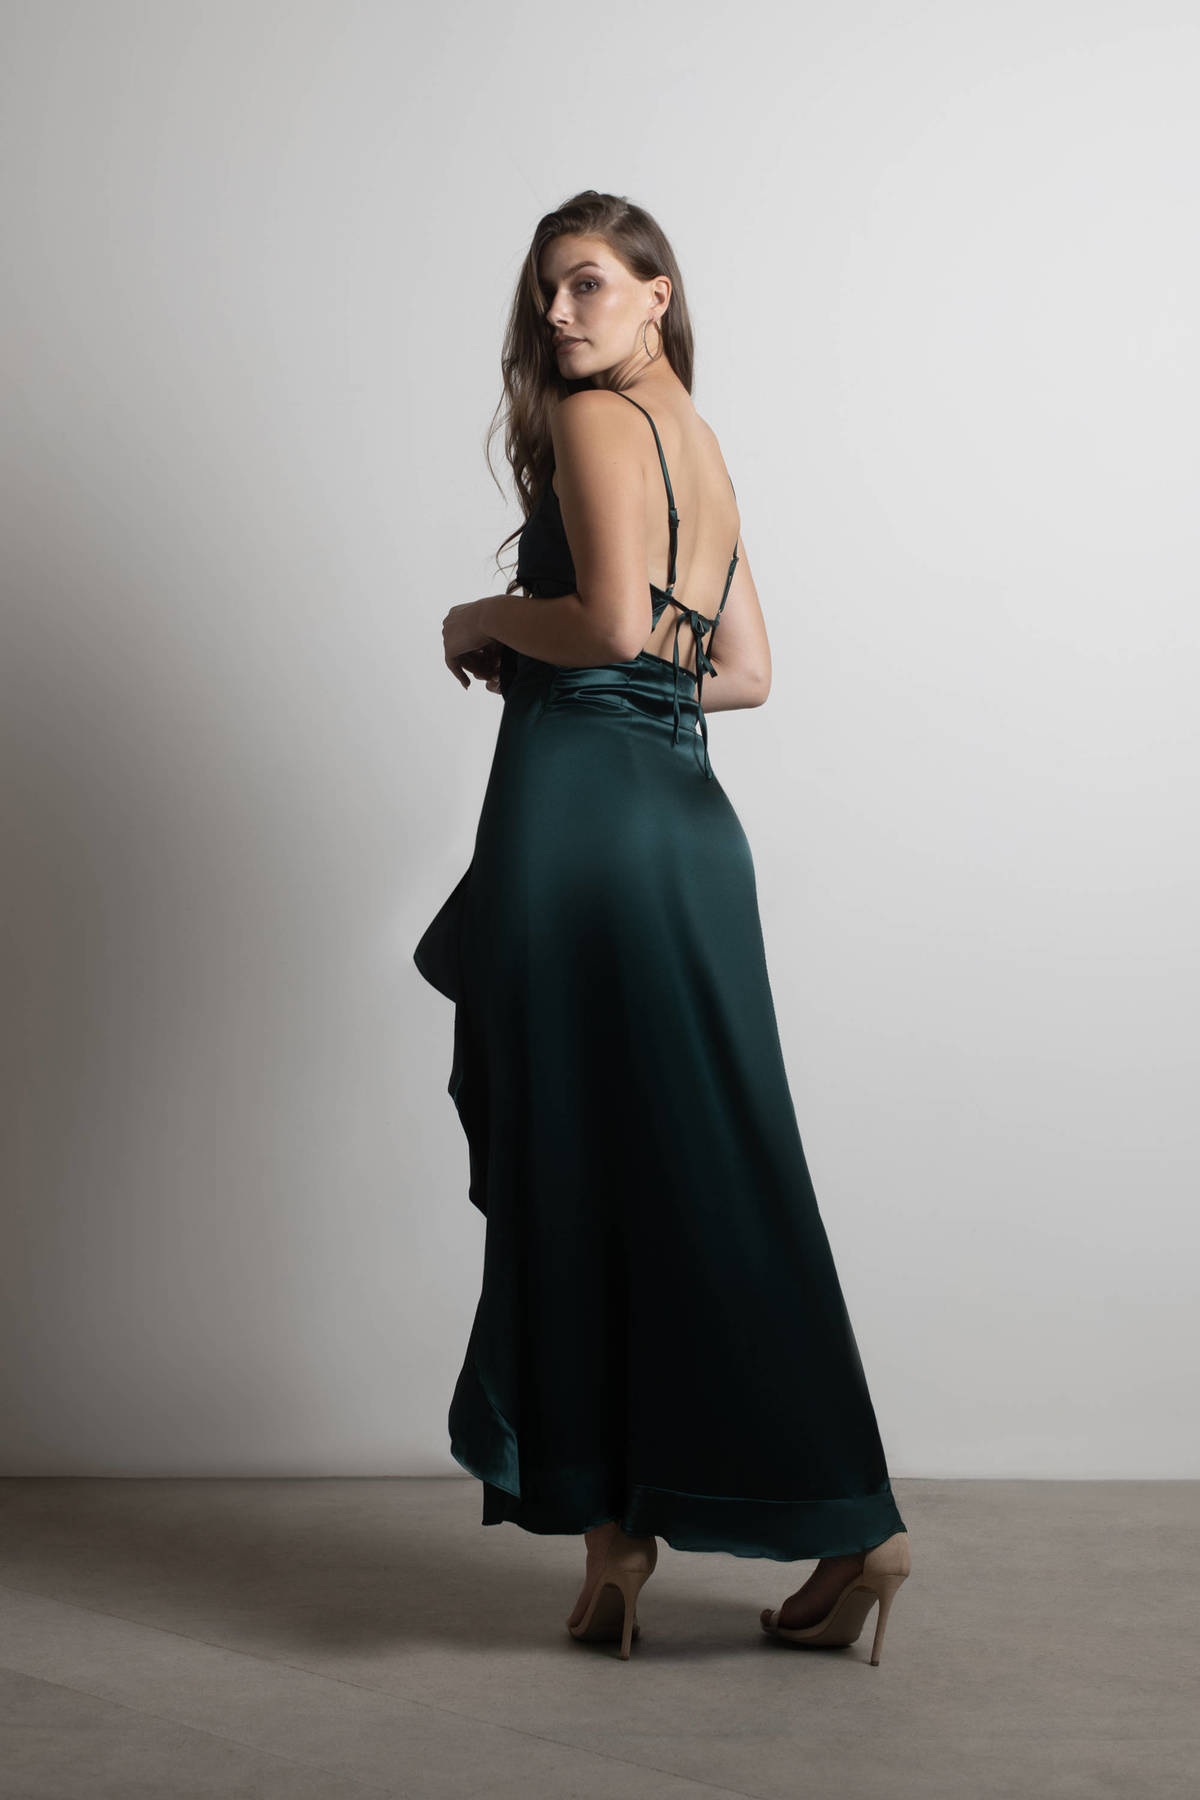 Hunter Green Asymmetric Dress - Ruffled Maxi Dress